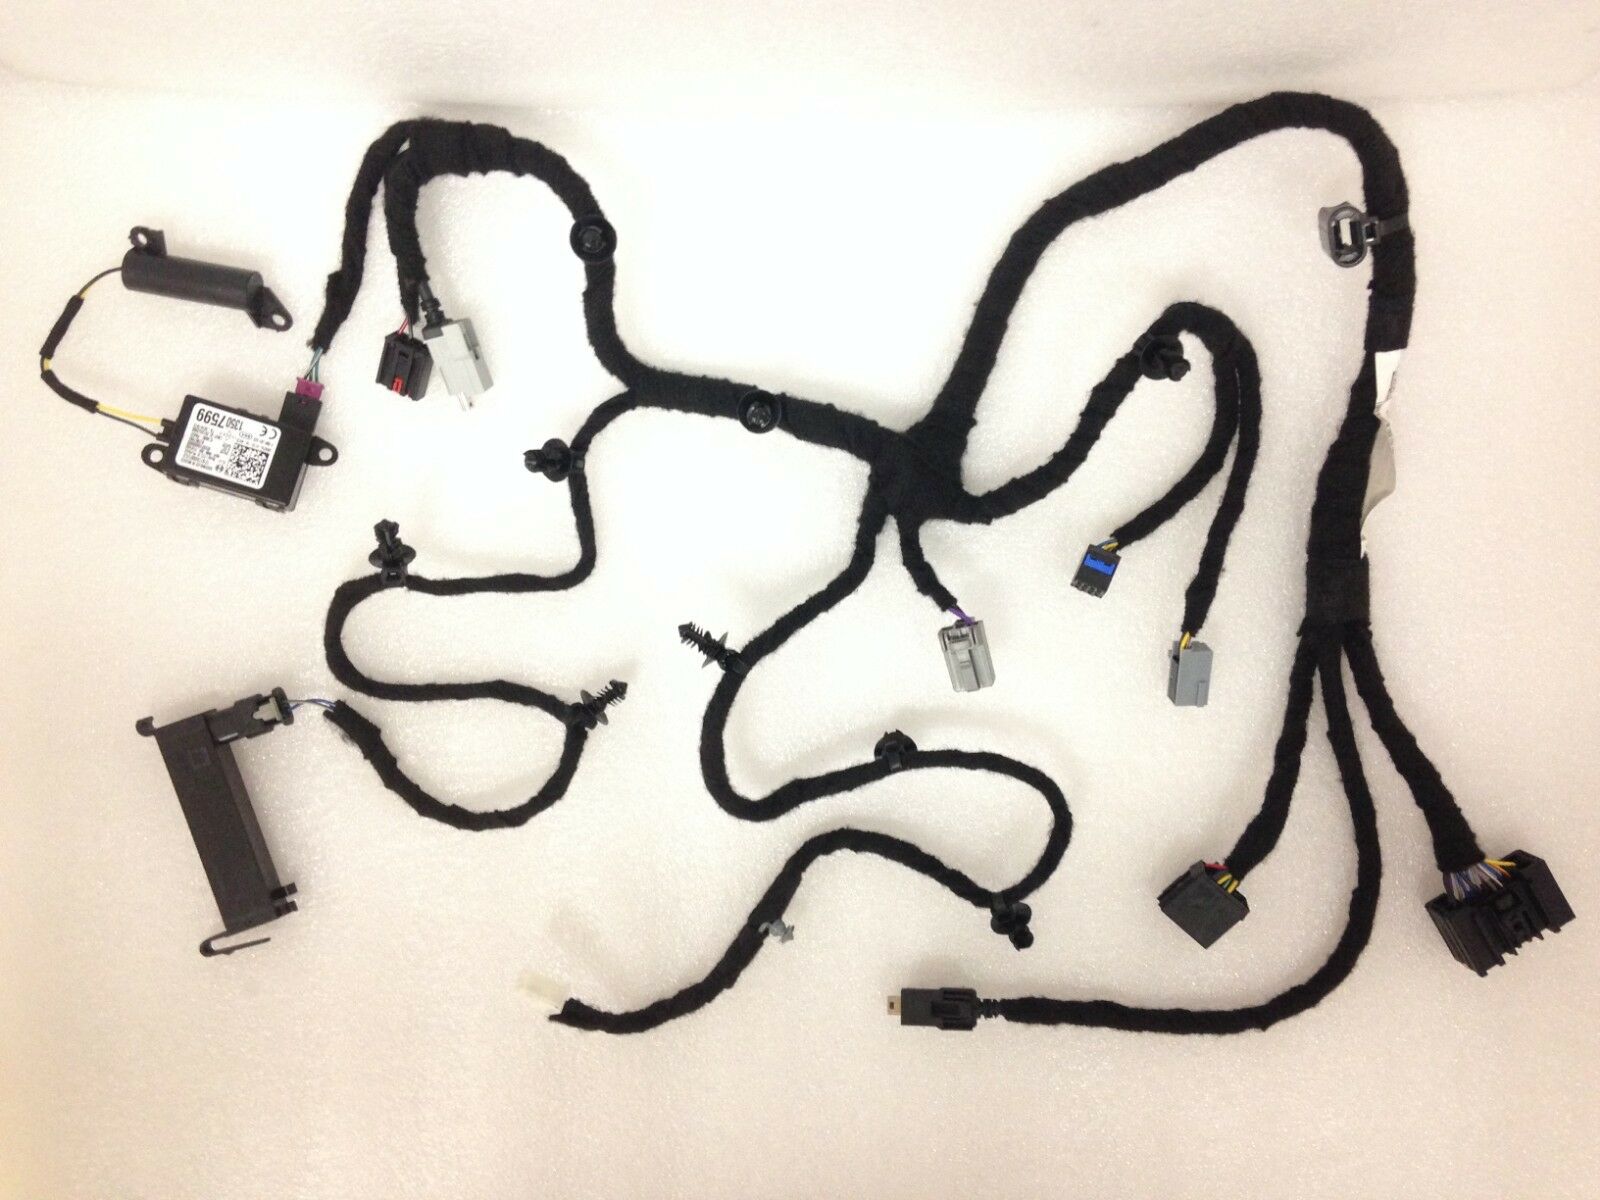 Camaro 2016+ center console wiring harness